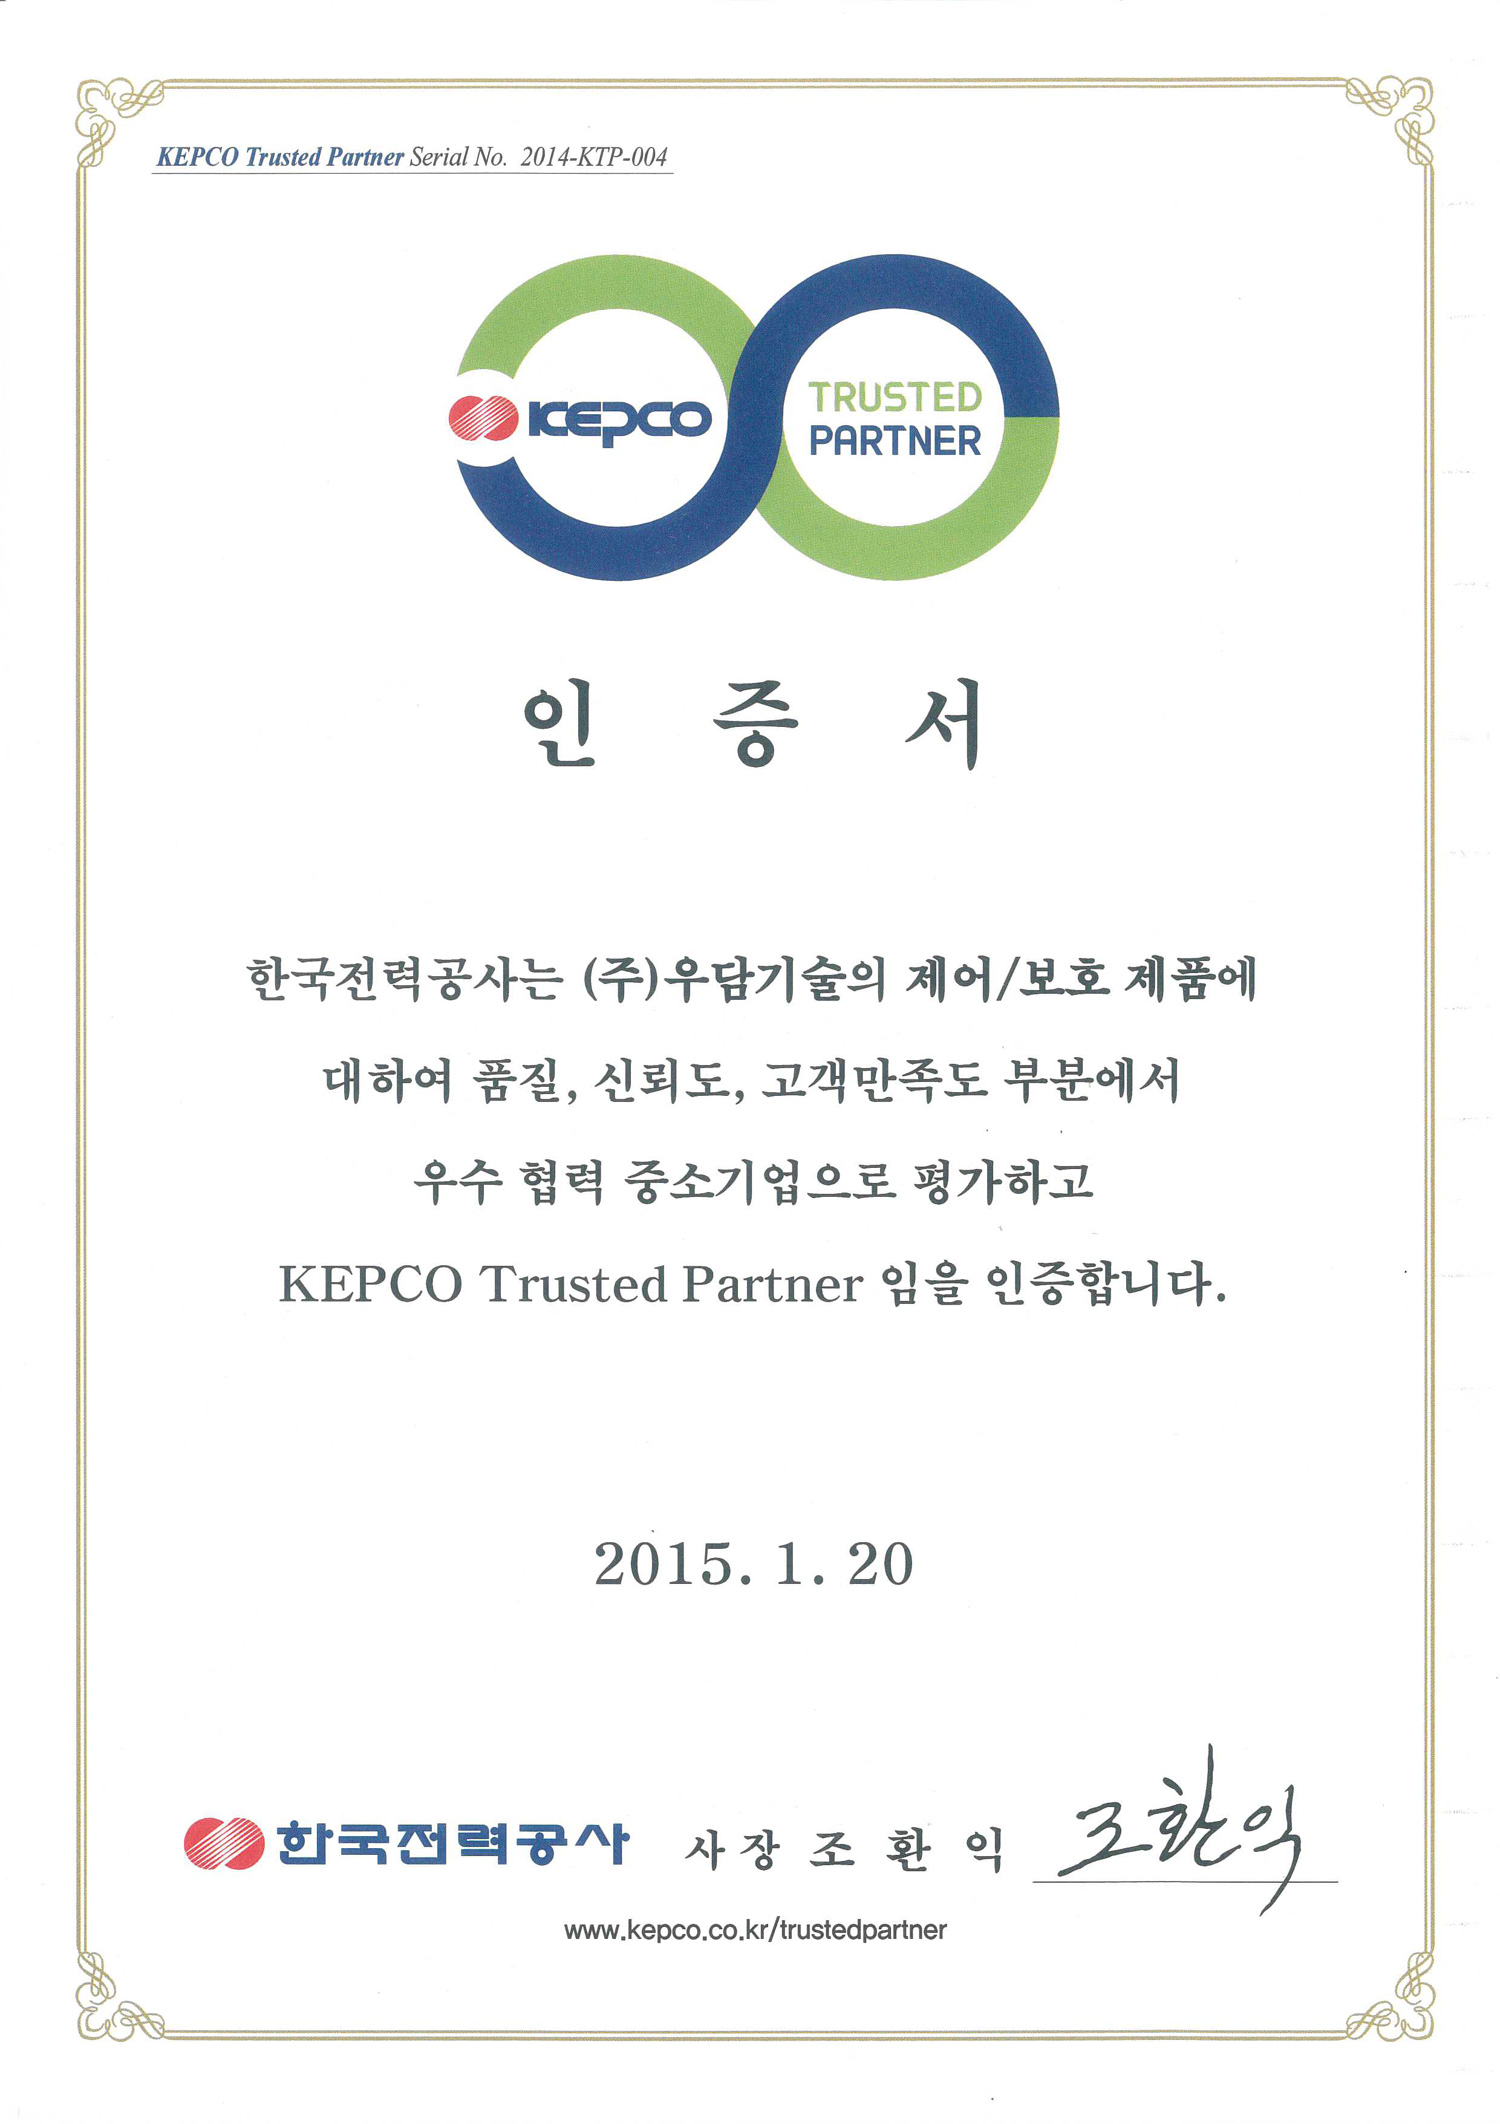 kepco-trusted-partner_1500.jpg